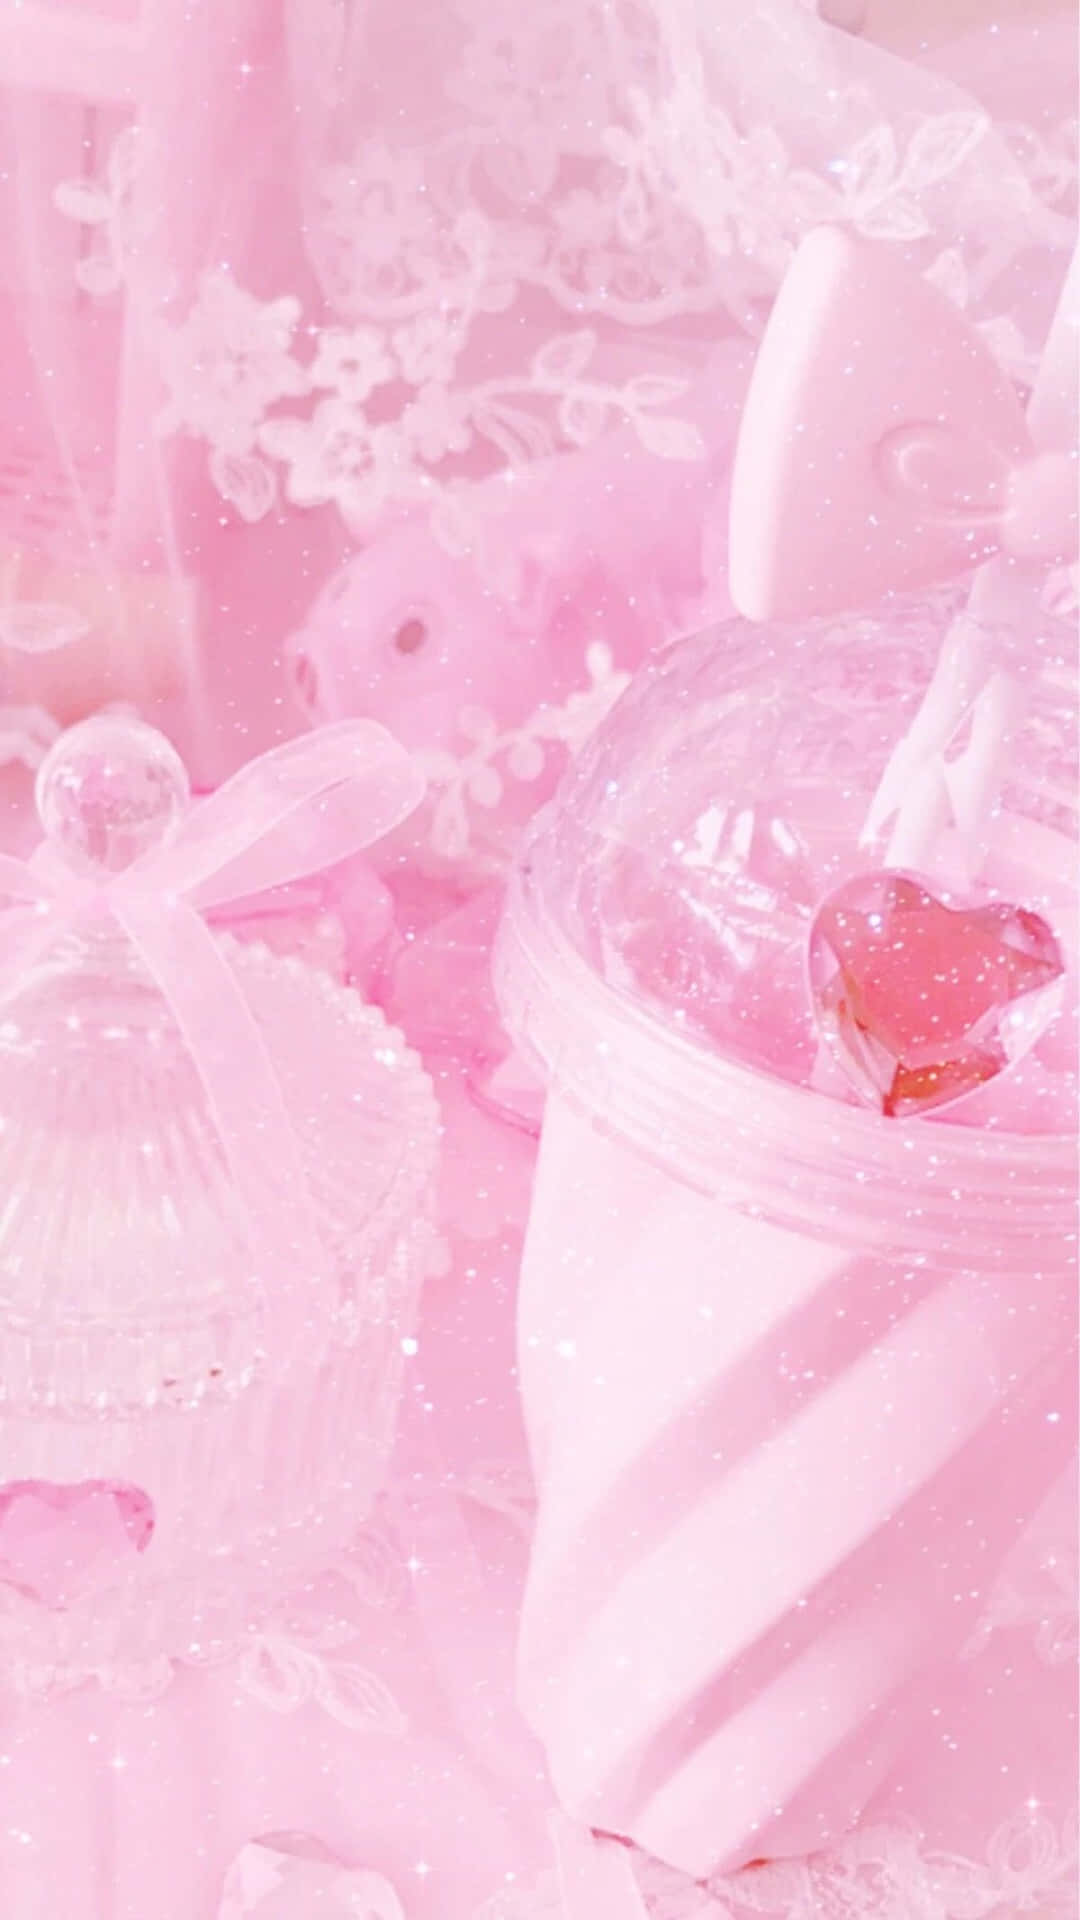 Soft, Calming Tones Of Pink Evoke A Sense Of Joy. Background